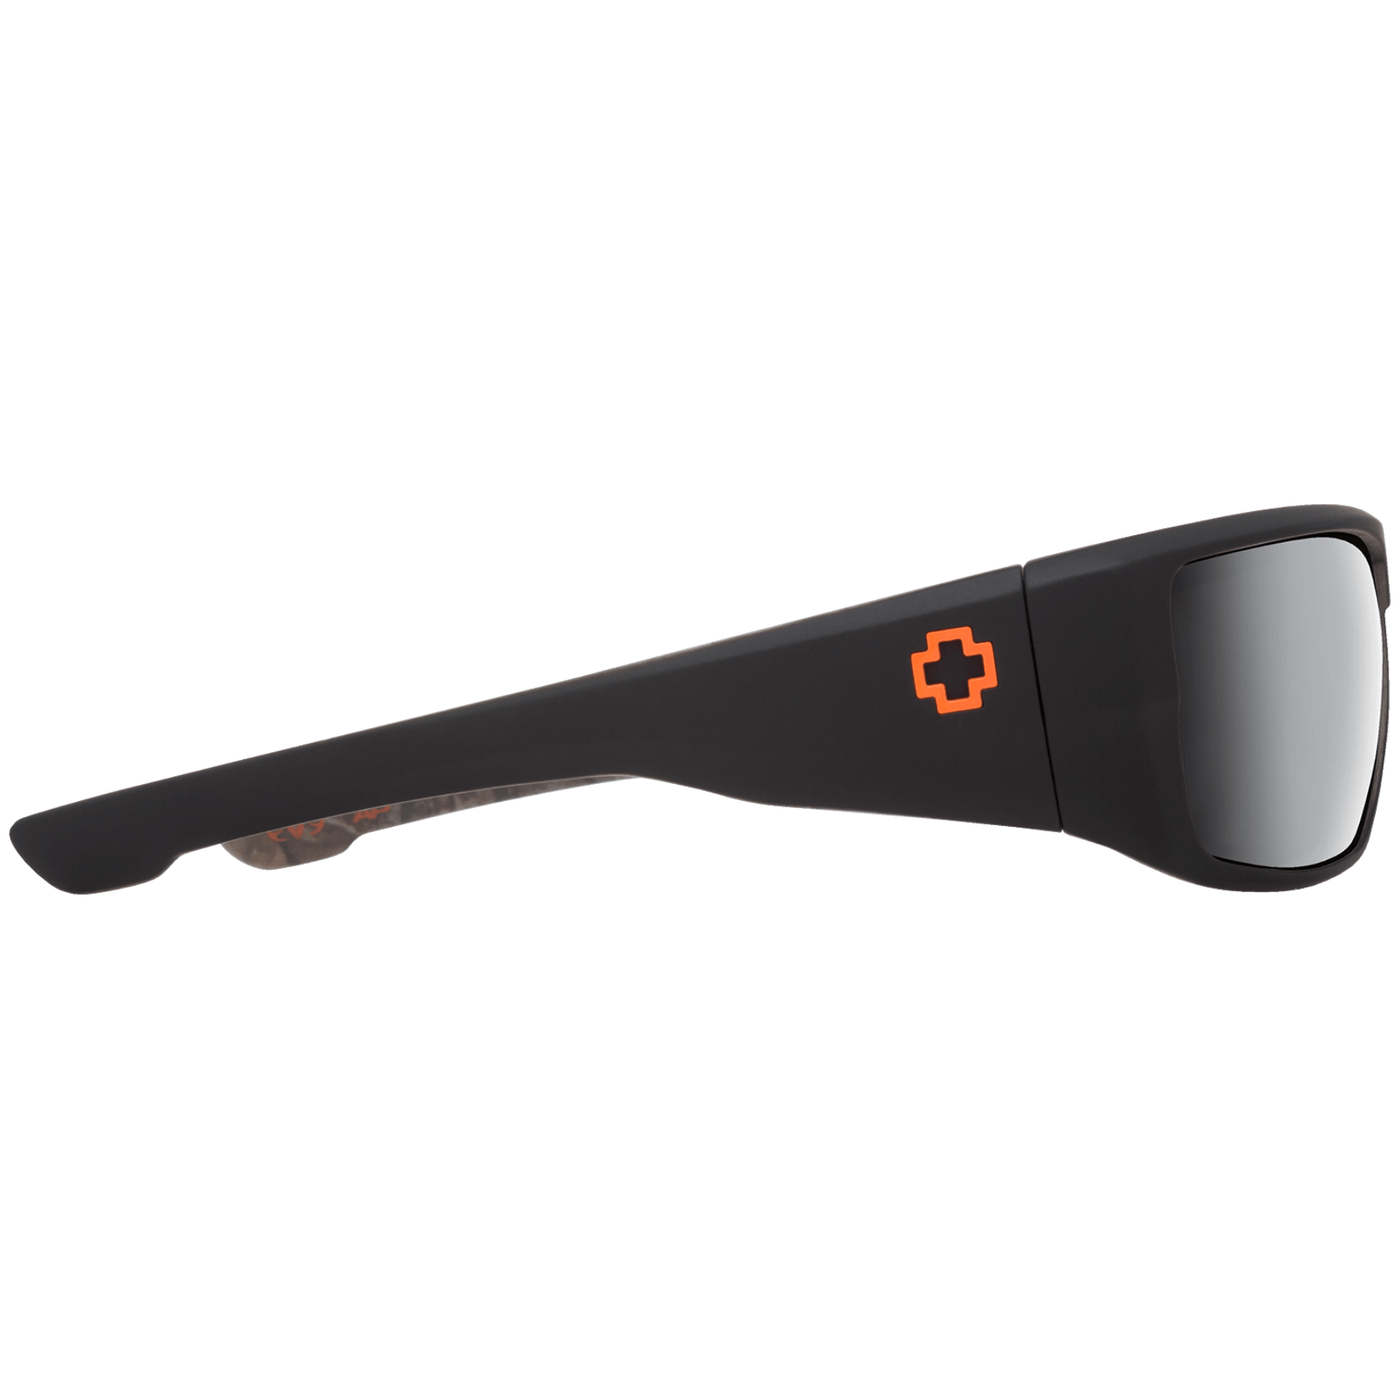 SPY DIRK Polarized Sunglasses, Happy Lens - Decoy Realtree 8Lines Shop - Fast Shipping